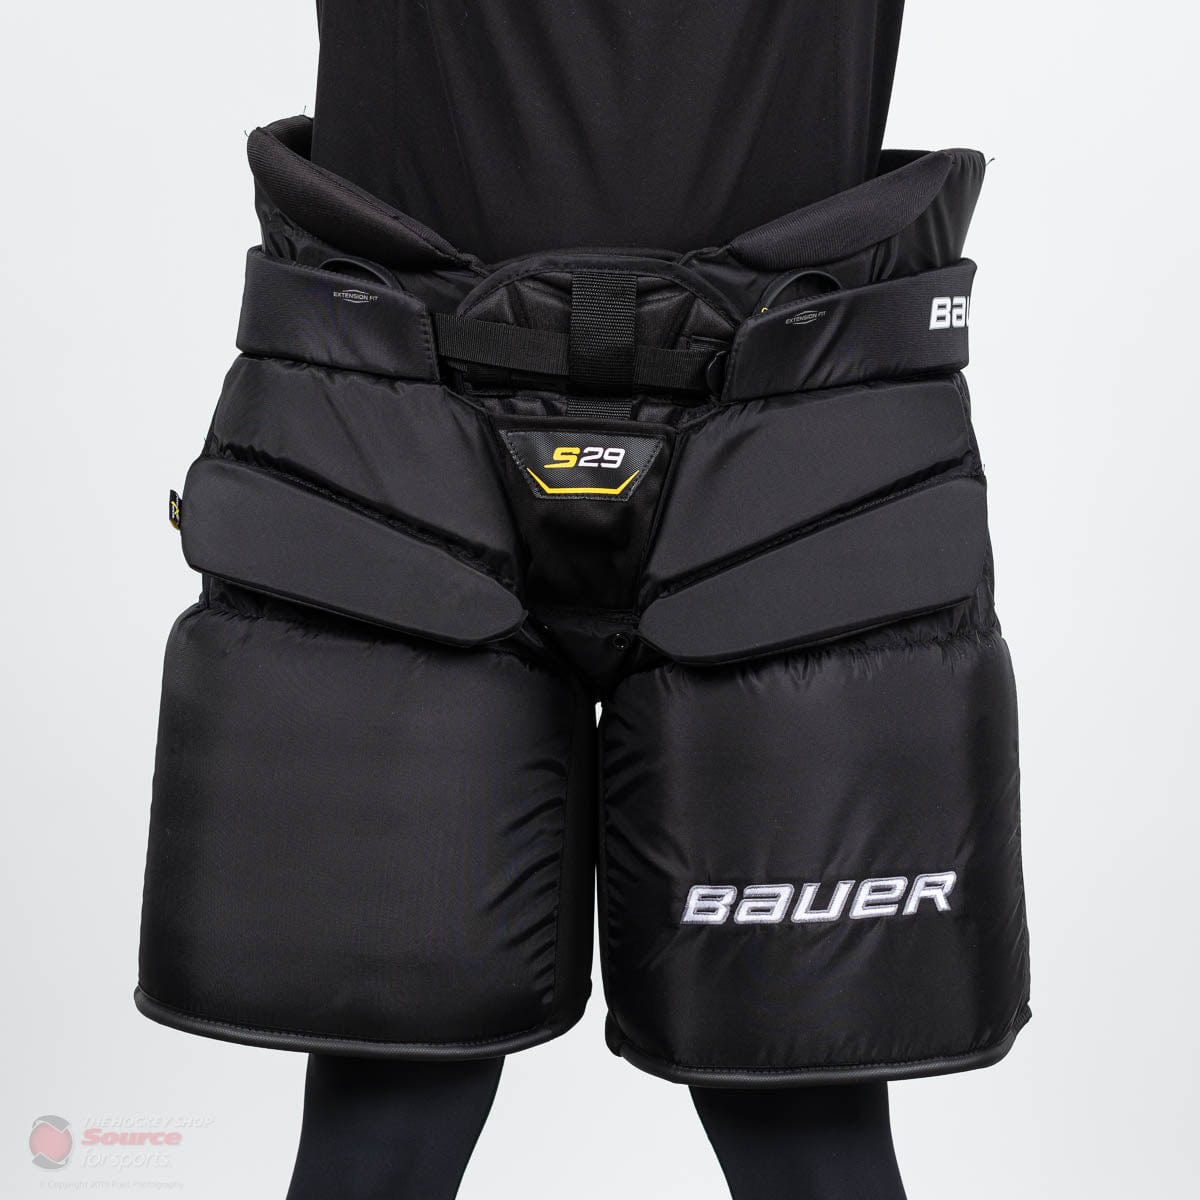 Bauer Supreme S29 Senior Goalie Pants